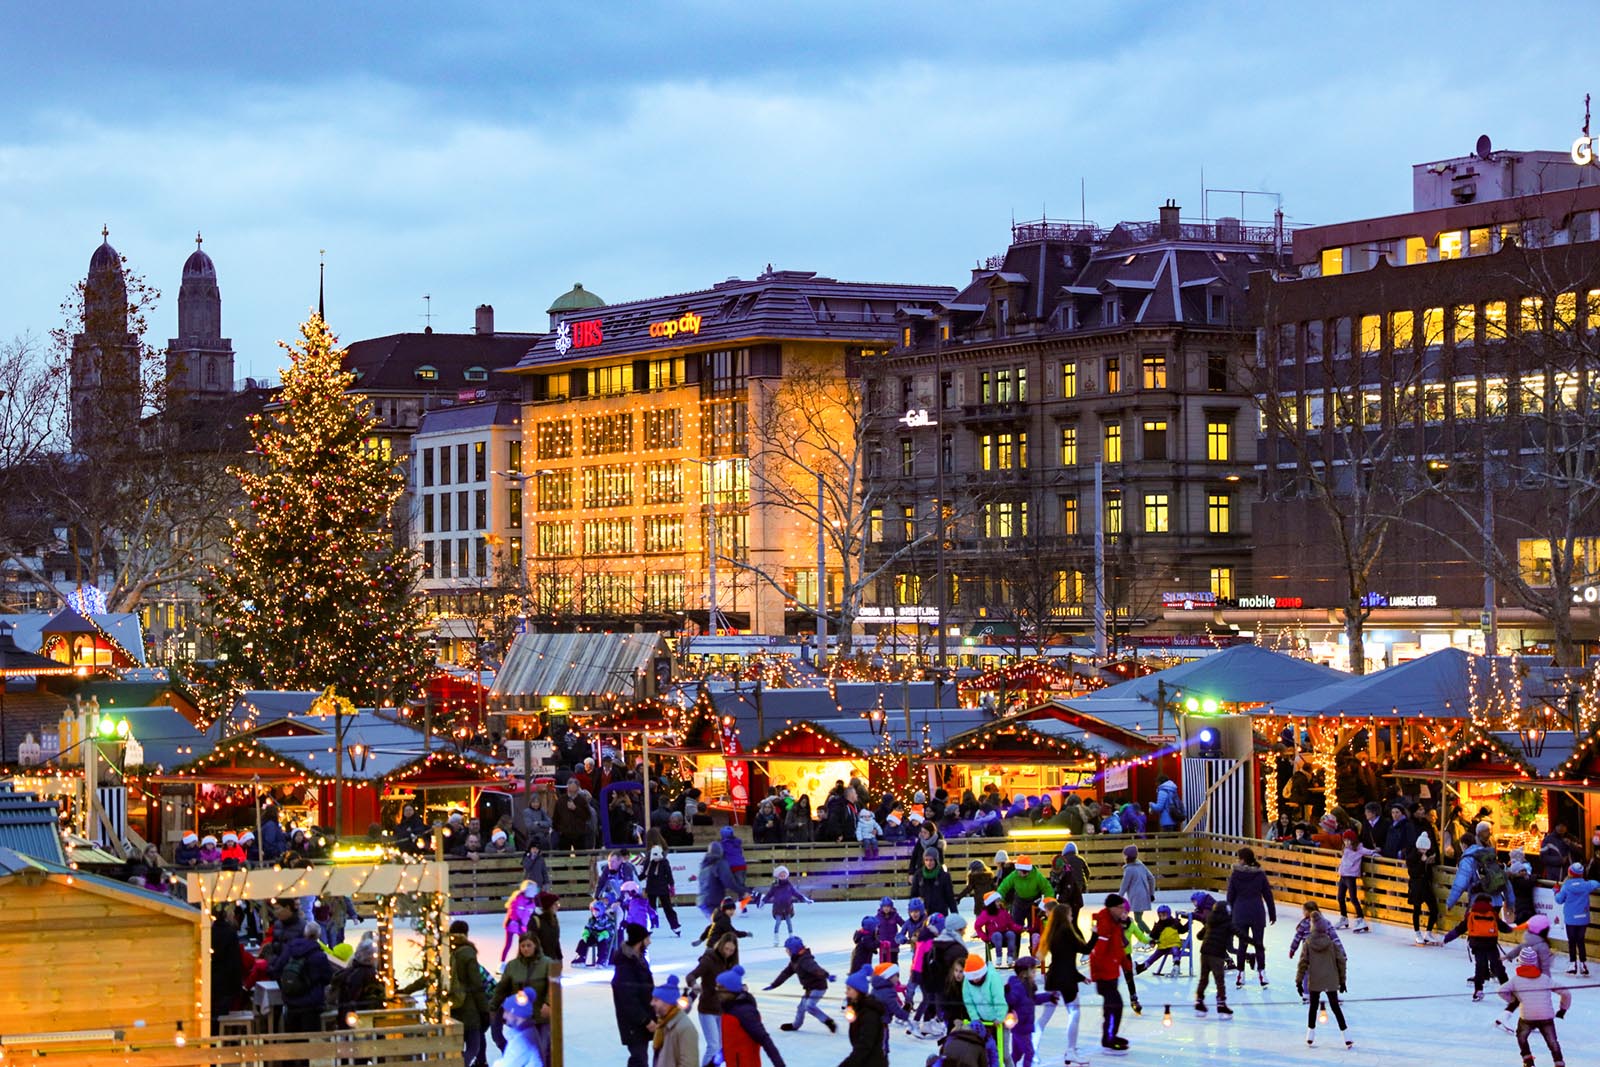 Christmas Market Zurich vidamoments